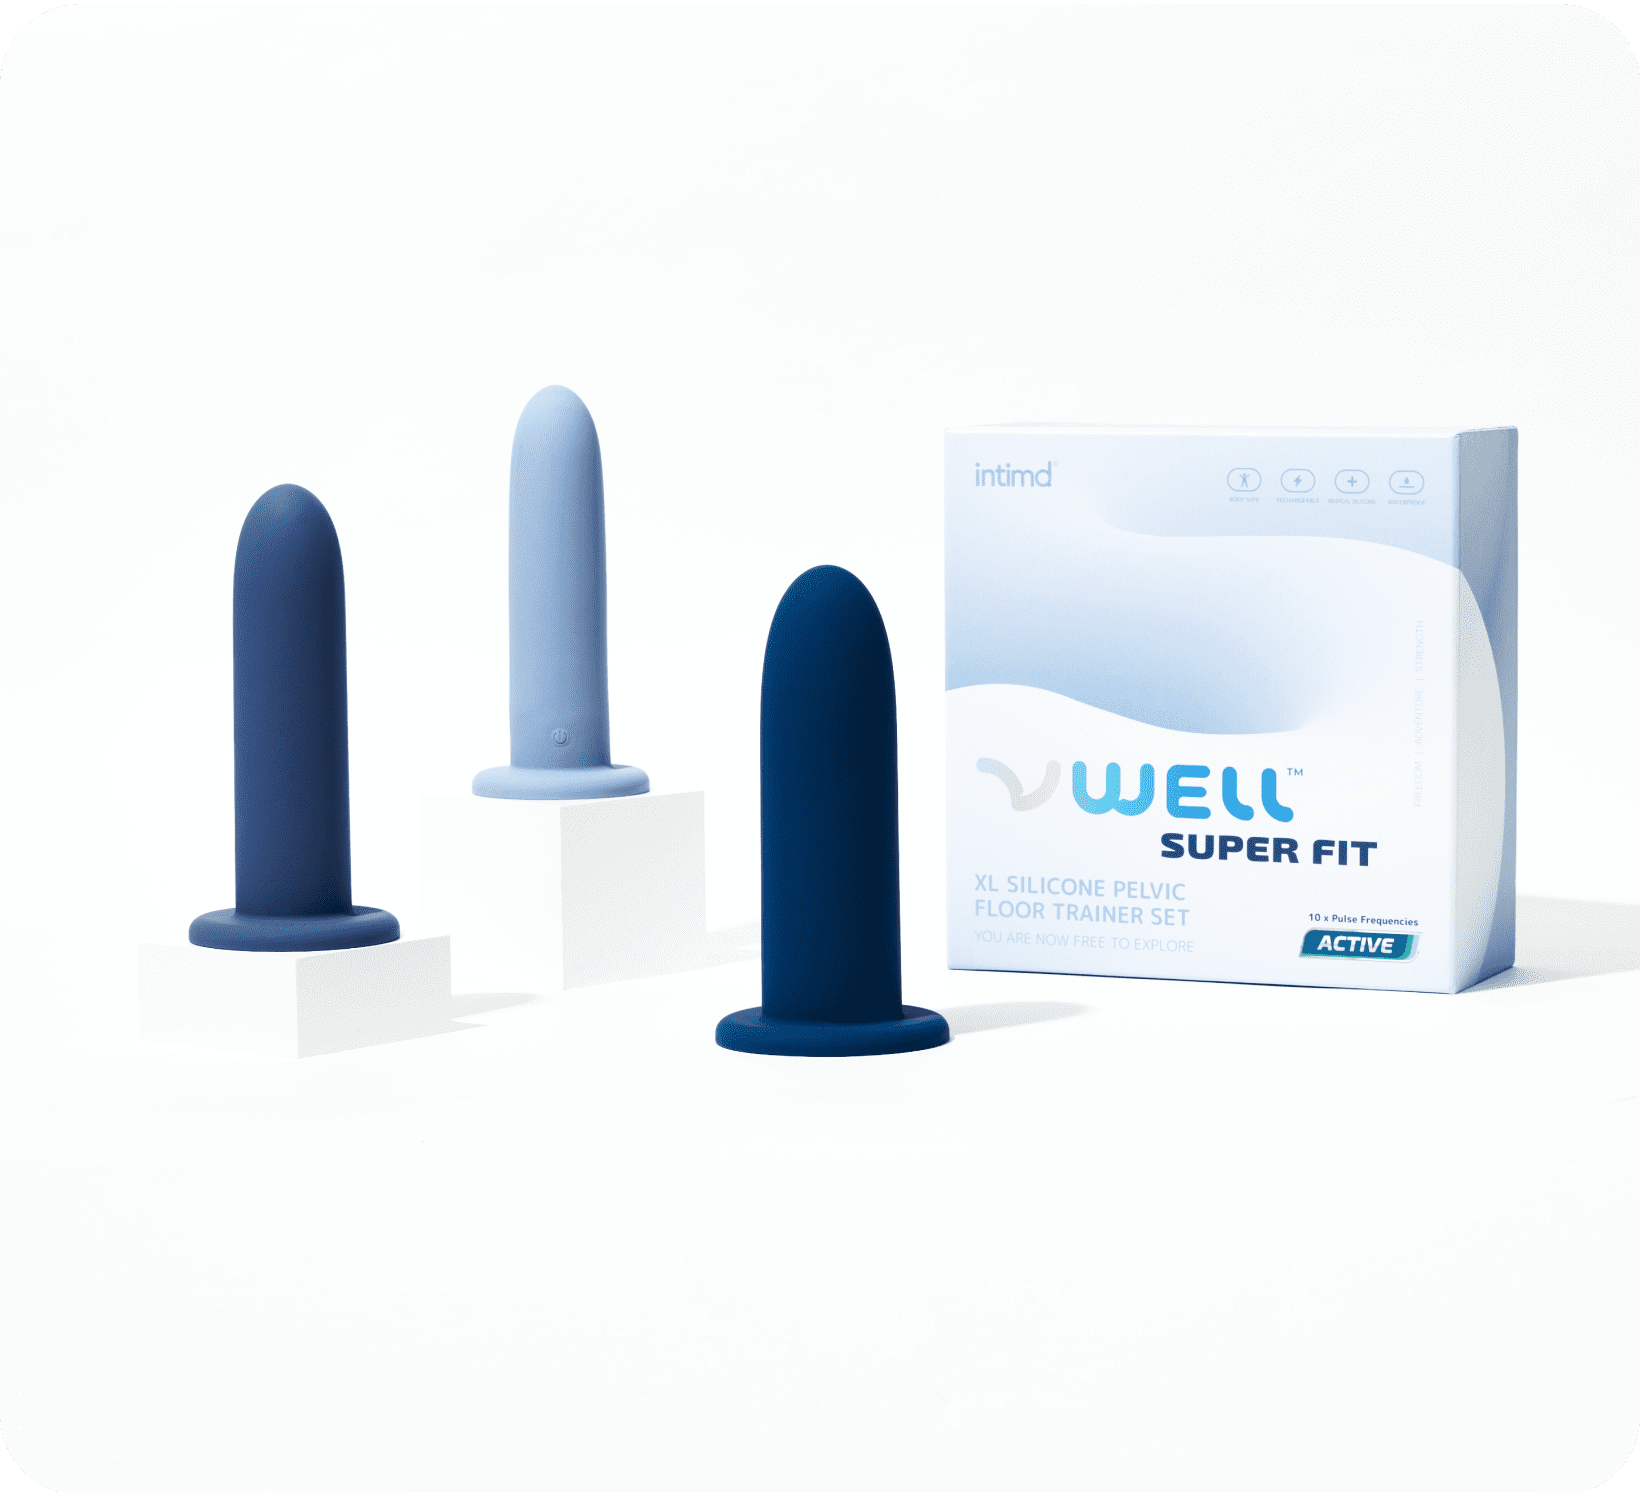 Super Fit XL Silicone Vaginal Dilator Set